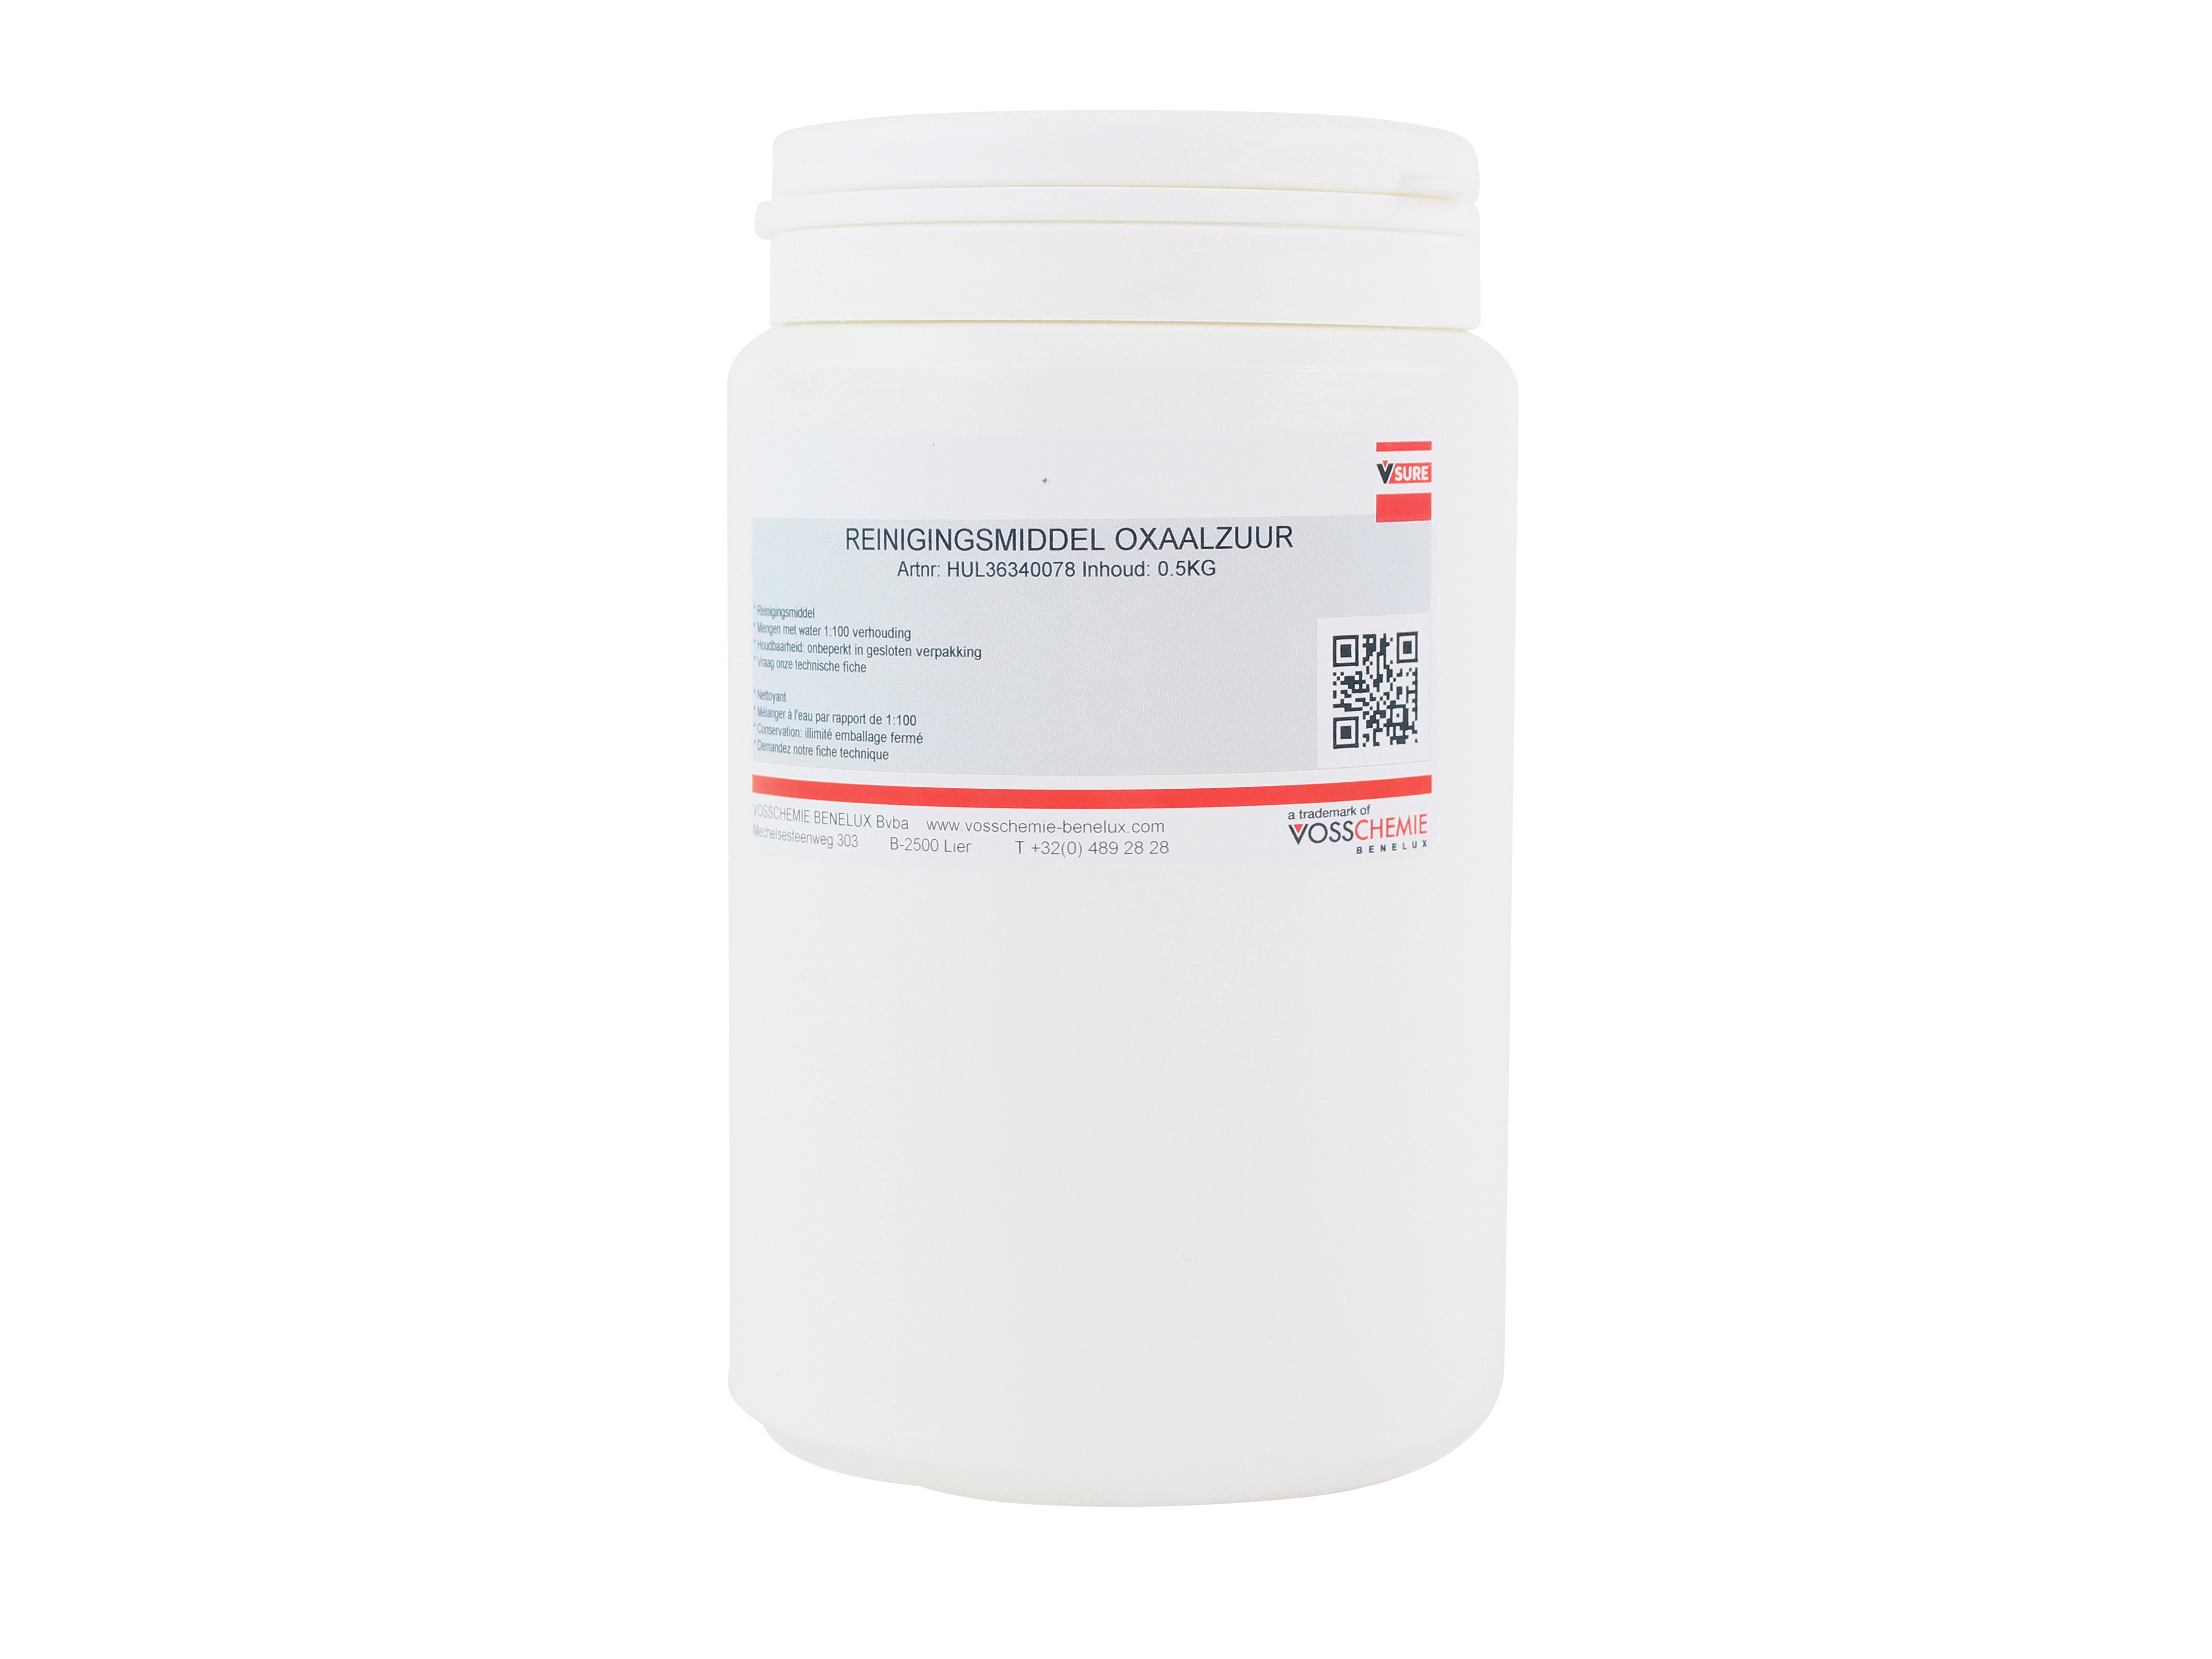 Oxalic acid - cleaning agent